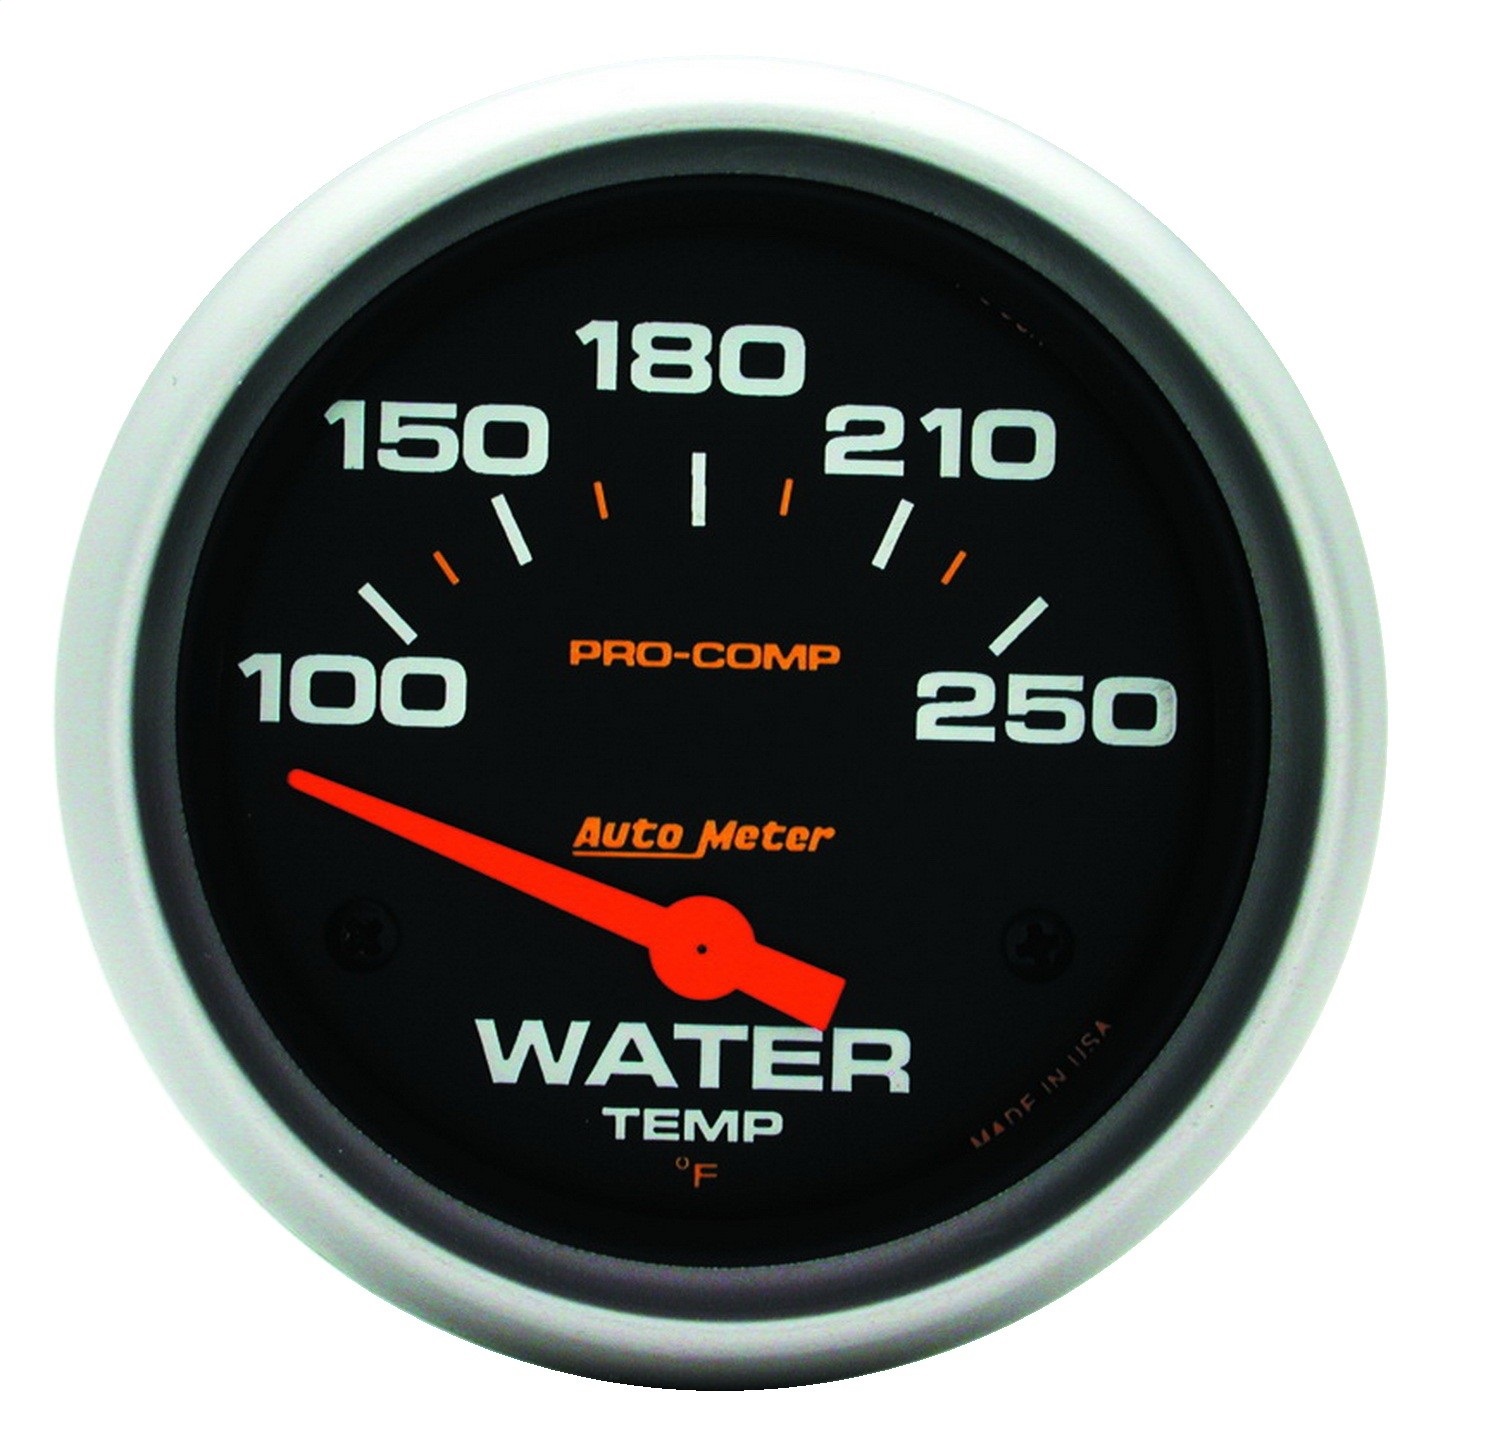 Auto Meter Auto Meter 5437 Pro-Comp; Electric Water Temperature Gauge